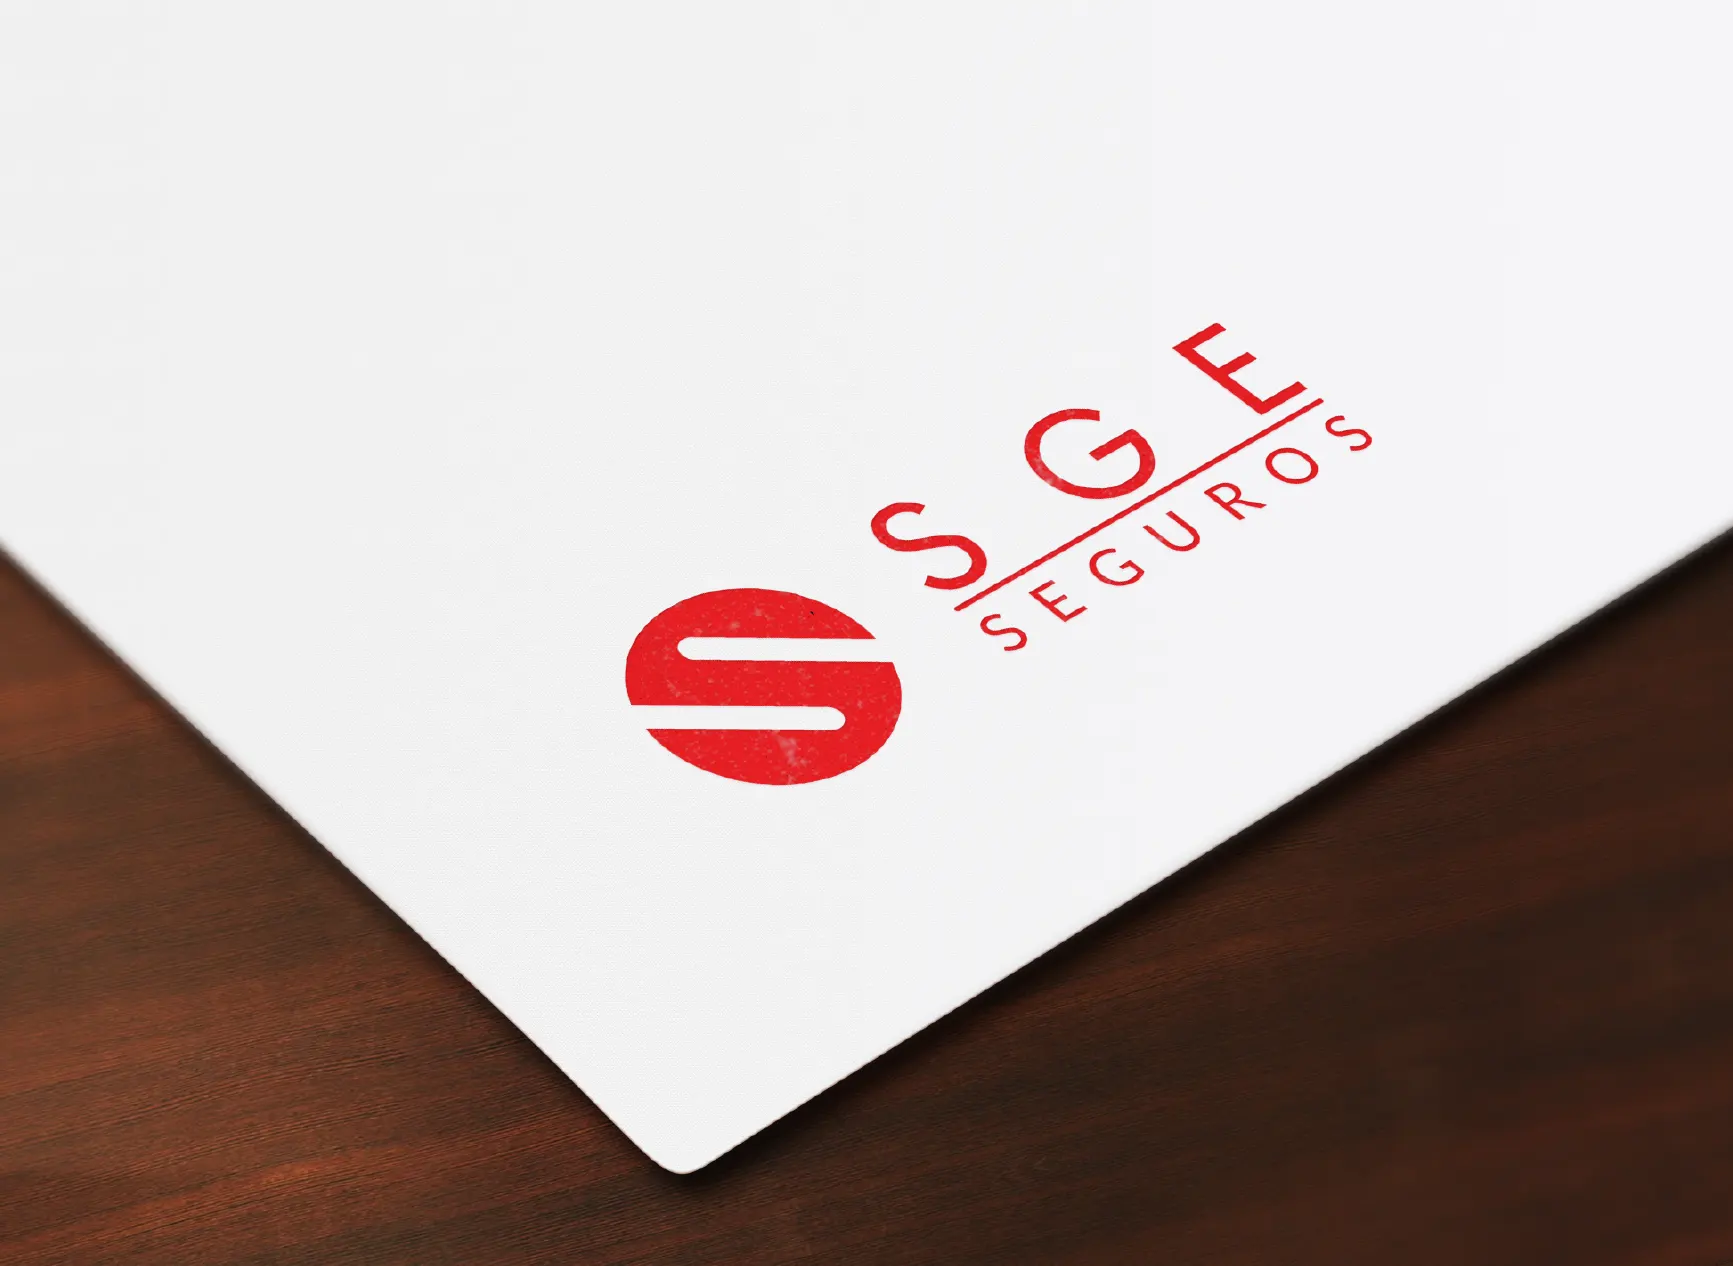 SGE-logo